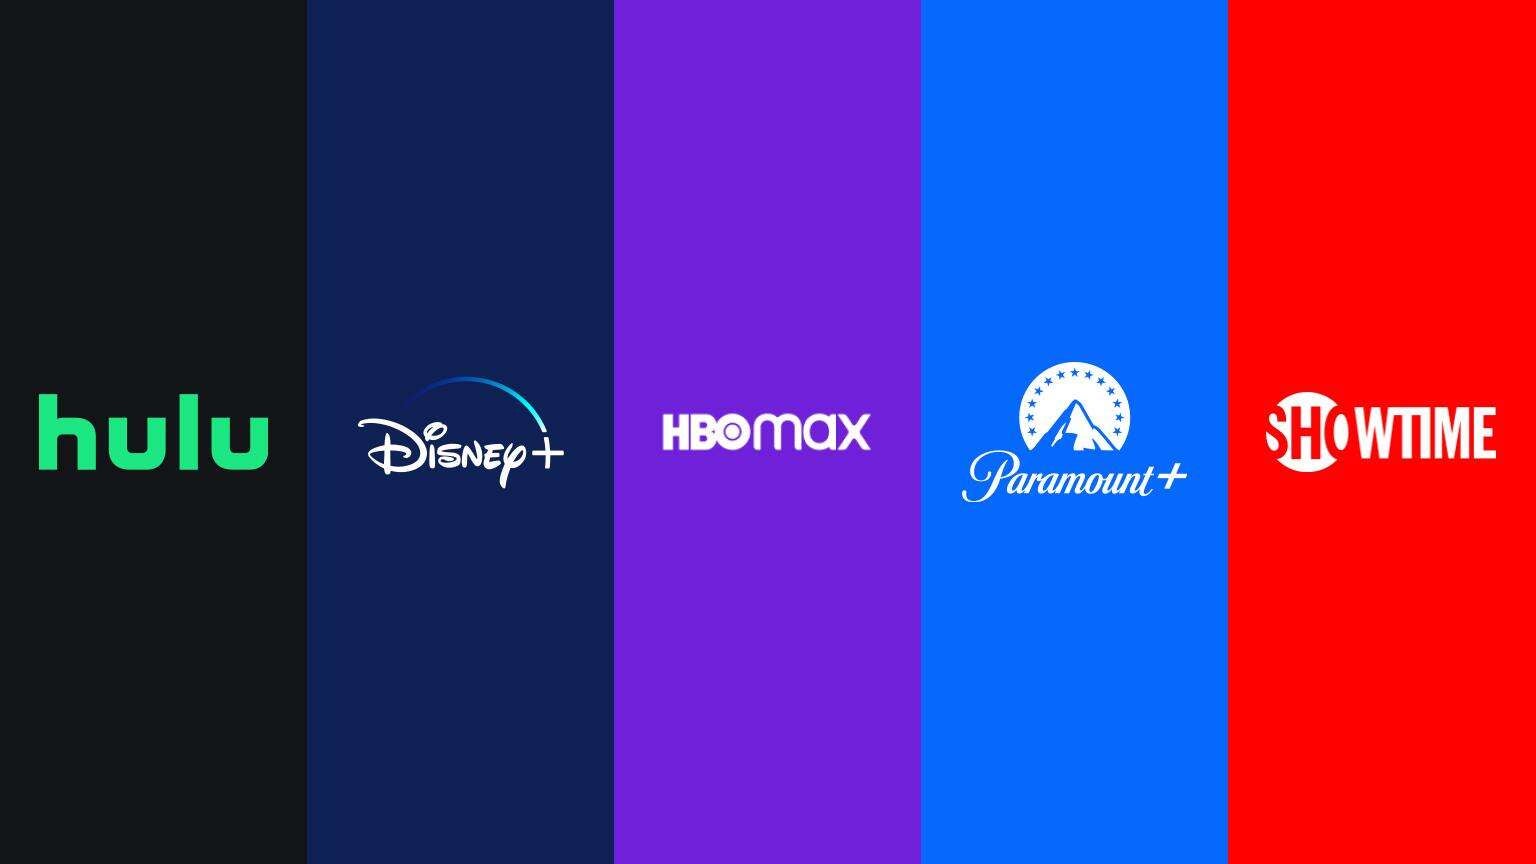 Black Friday Streaming Deals Get Hulu, Disney+, HBO Max, Paramount+